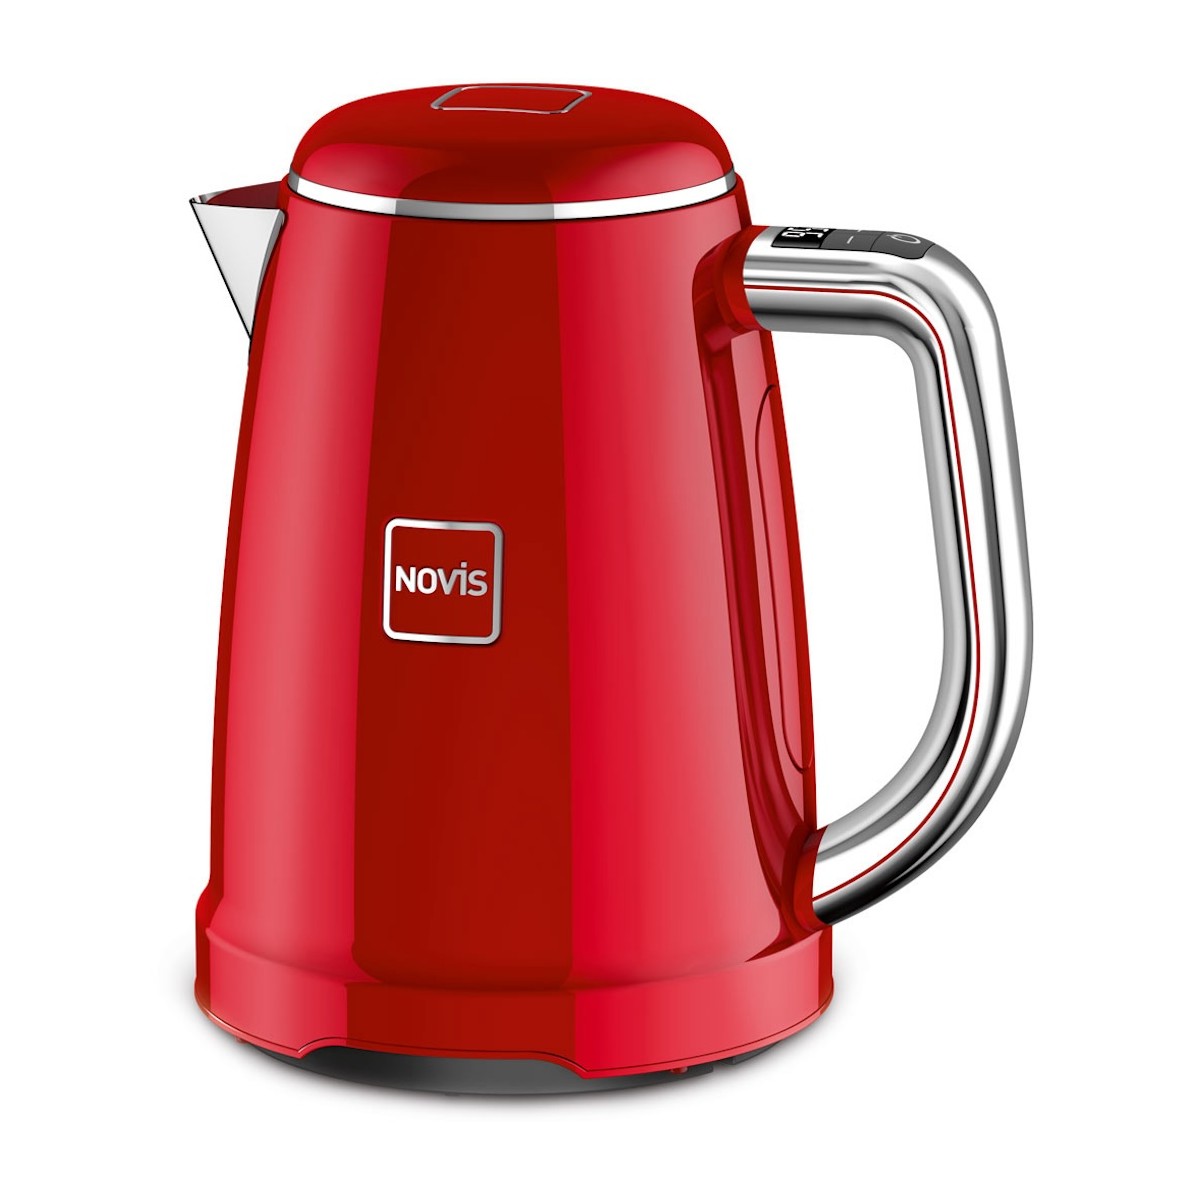 NOVIS KTC1 electric kettle - red